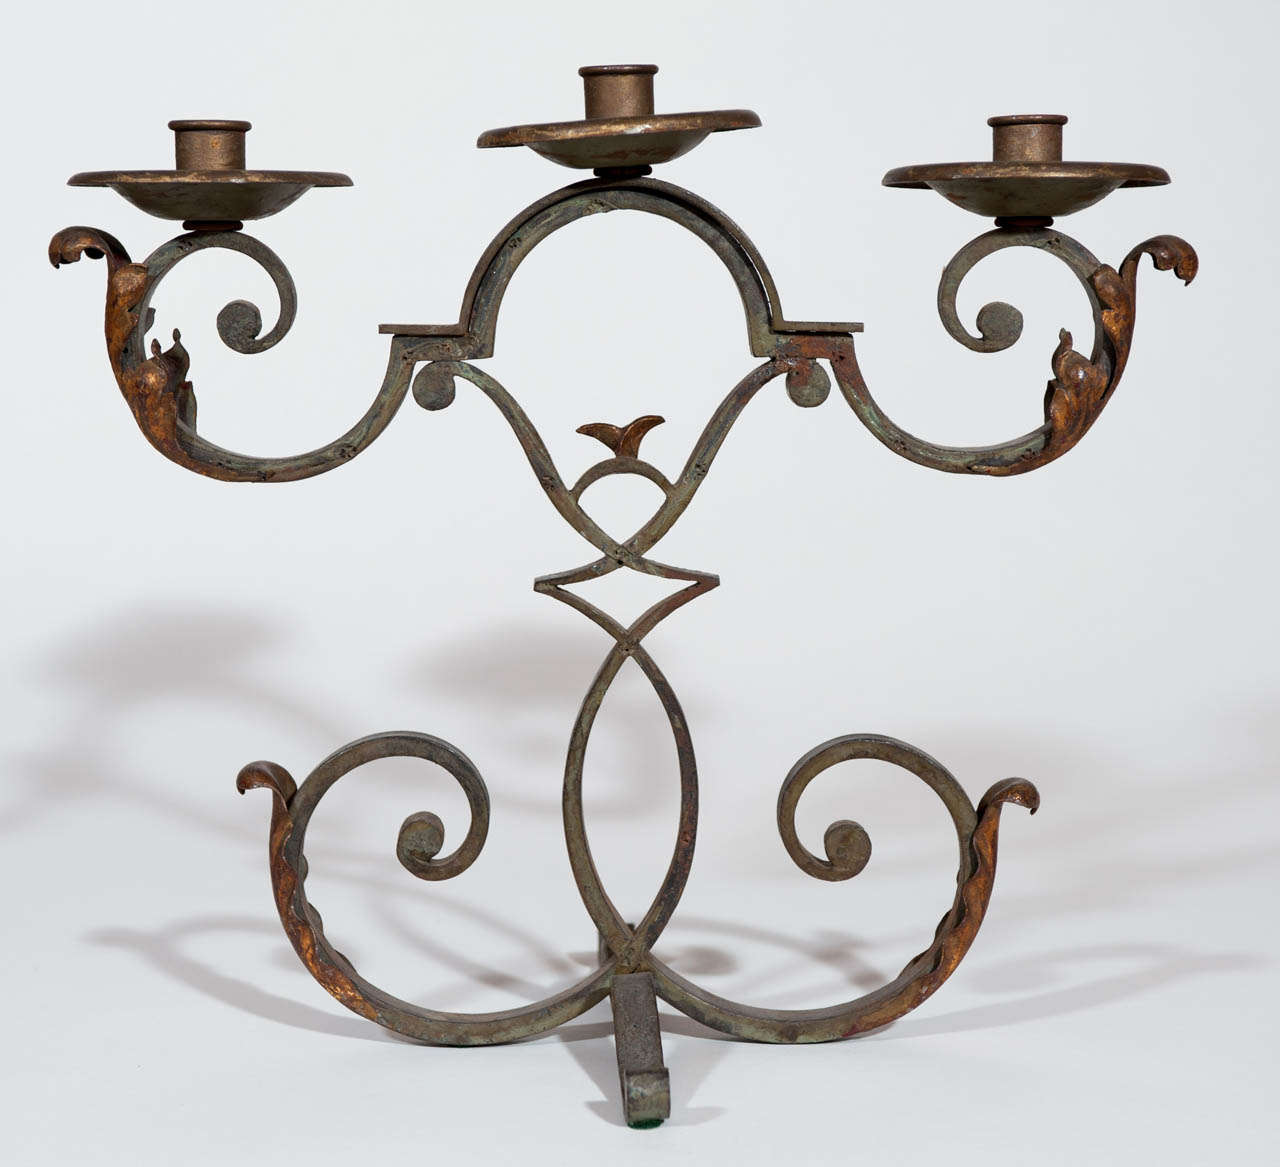 20th century pair of candelabra circa 1940 France wrought iron original patina
styling of Jules Leleu.